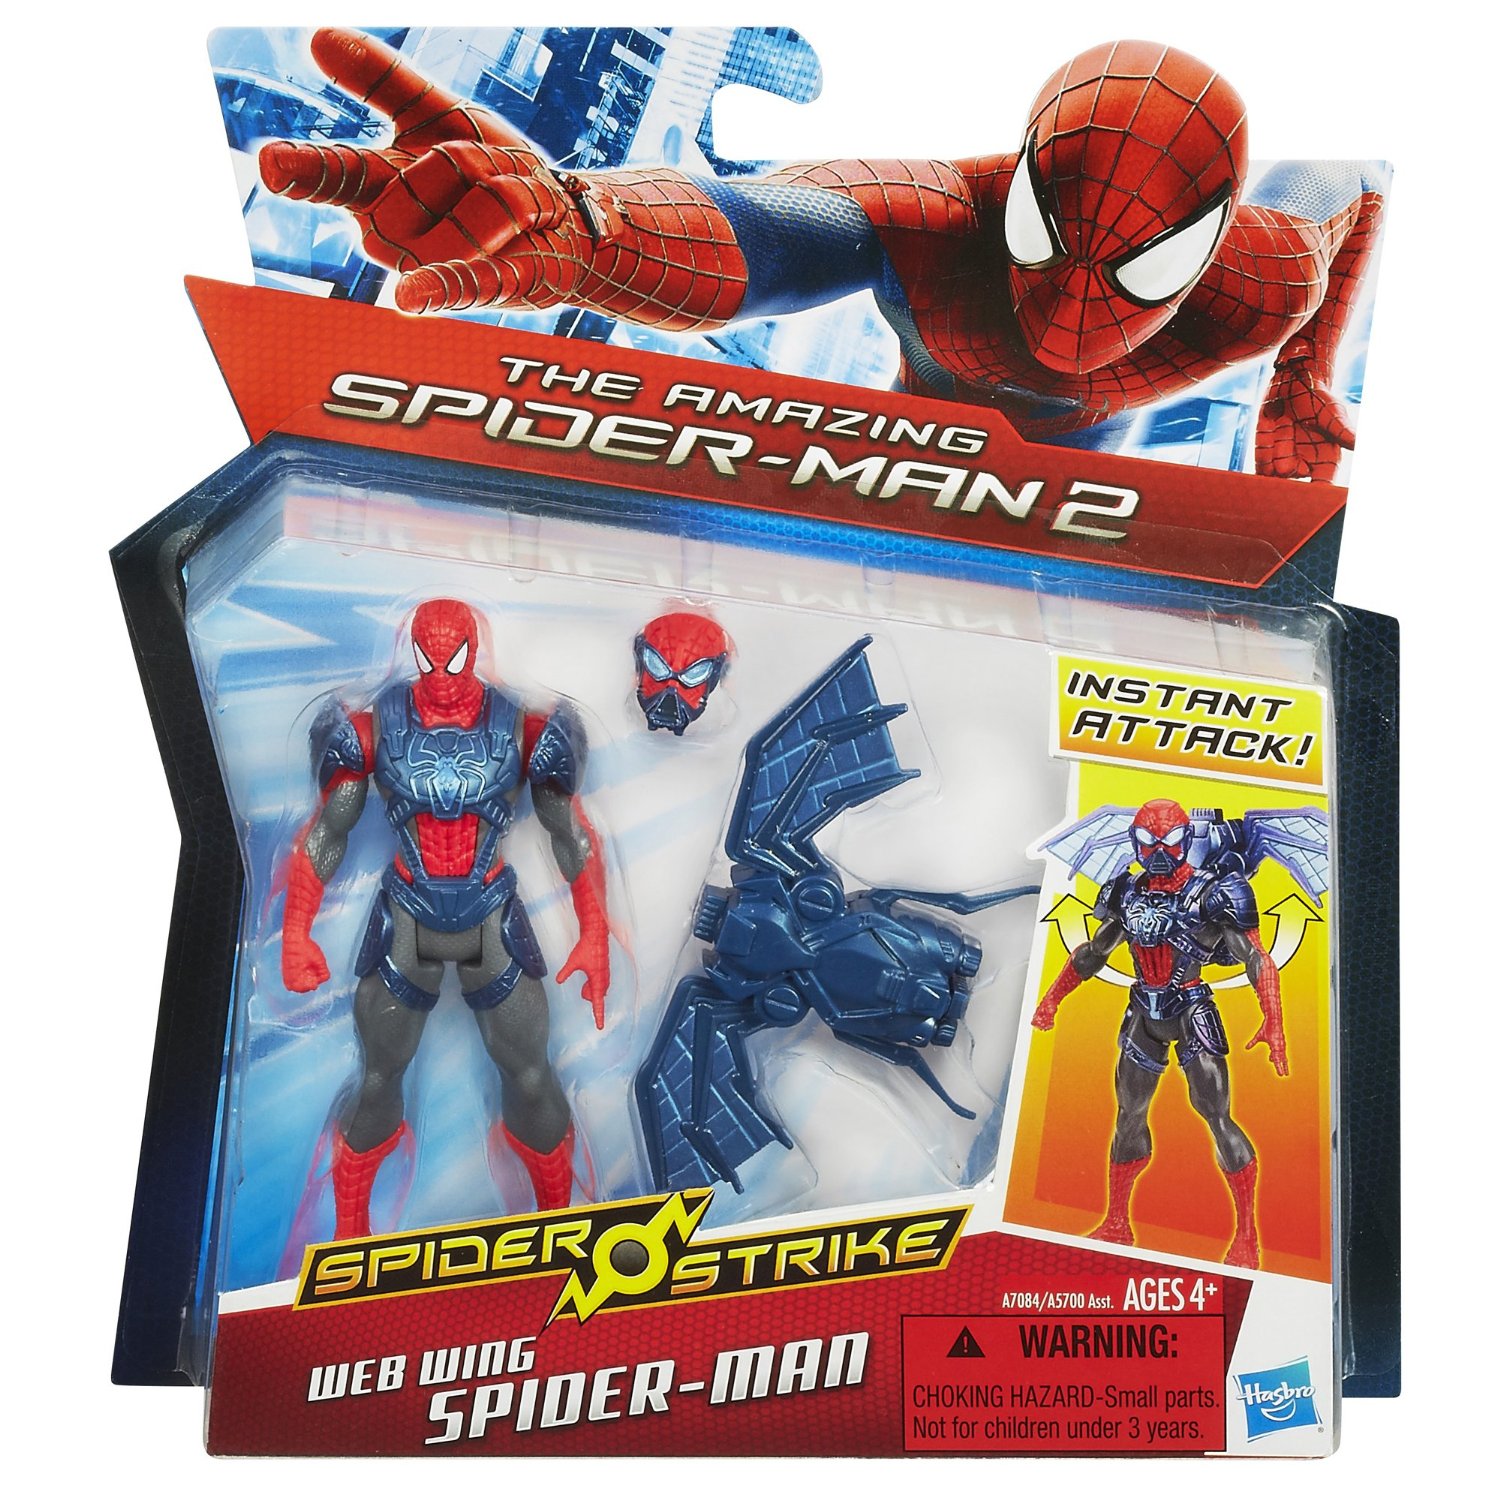 best spiderman toys